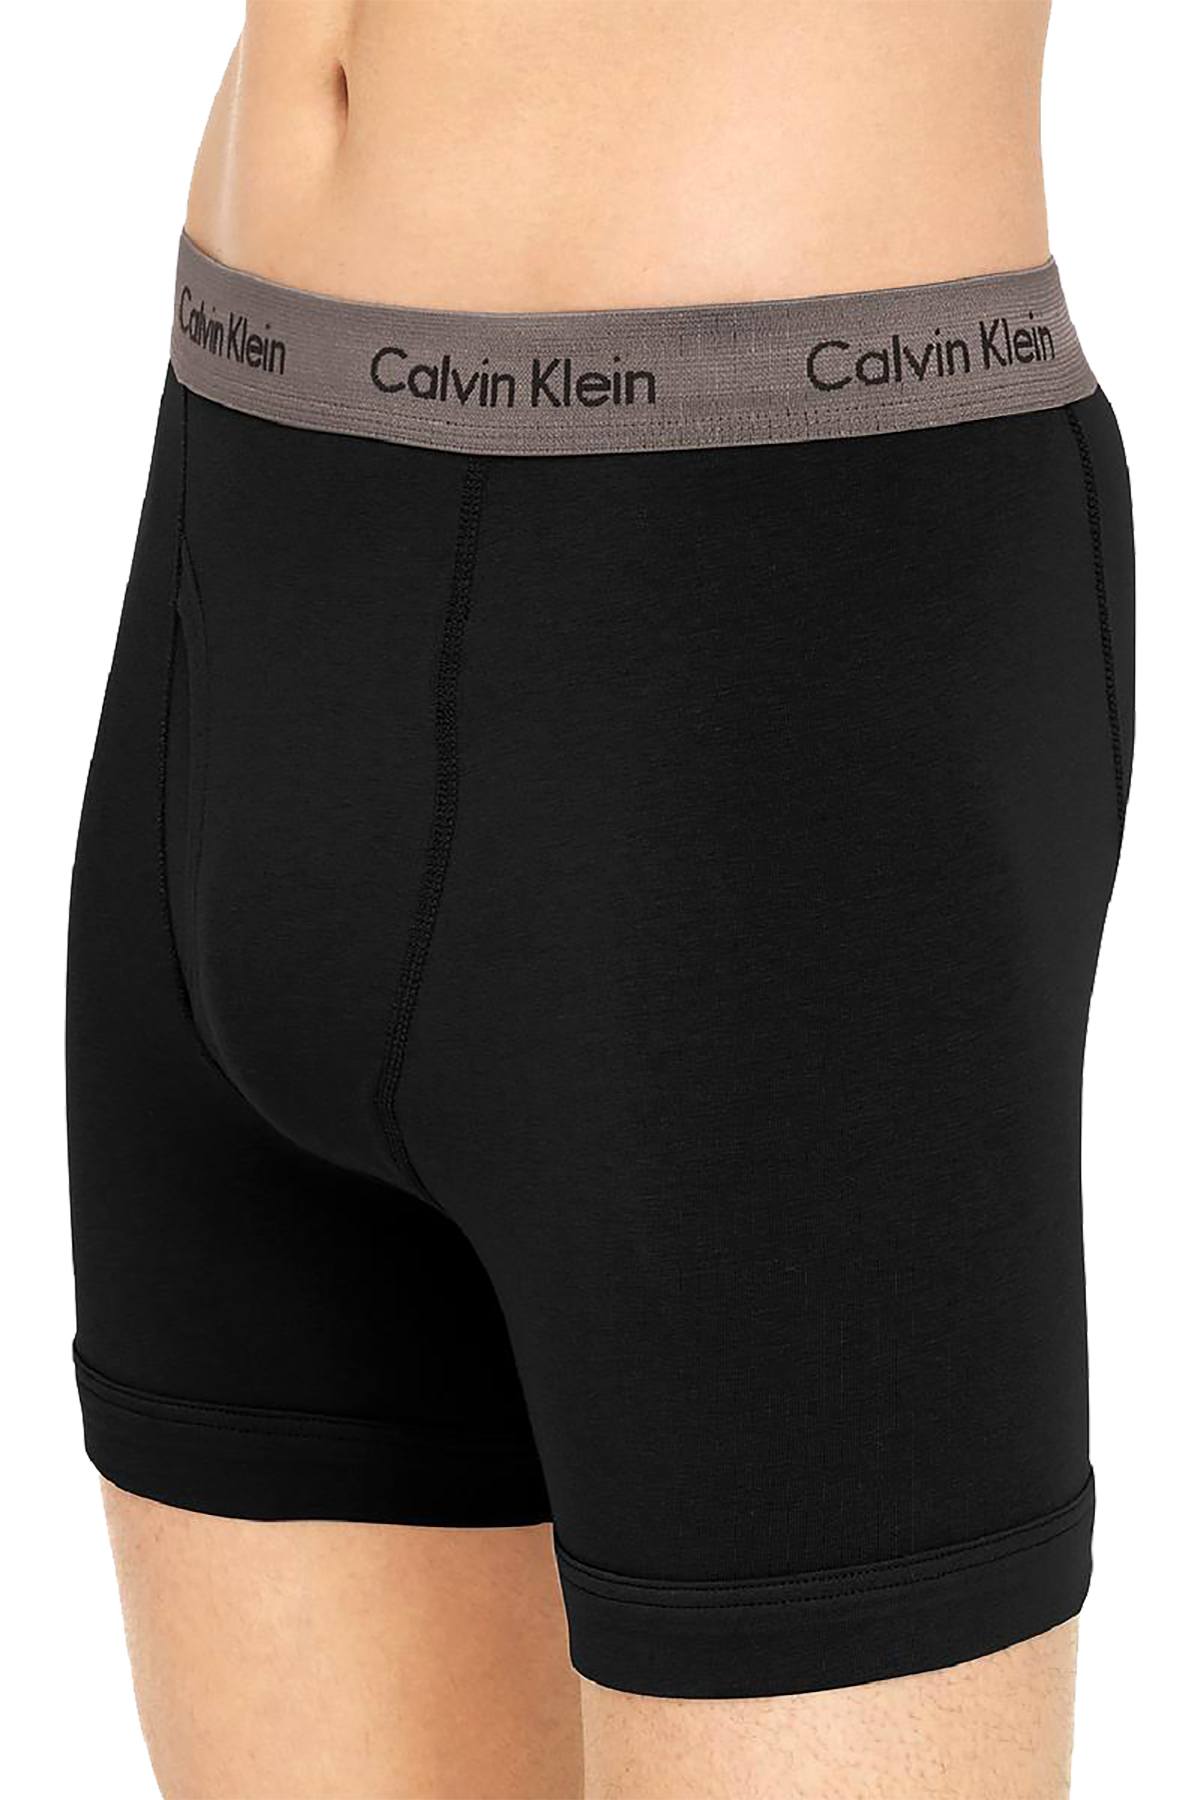 Calvin Klein Classic Fit Cotton Stretch Boxer Brief 3-Pack